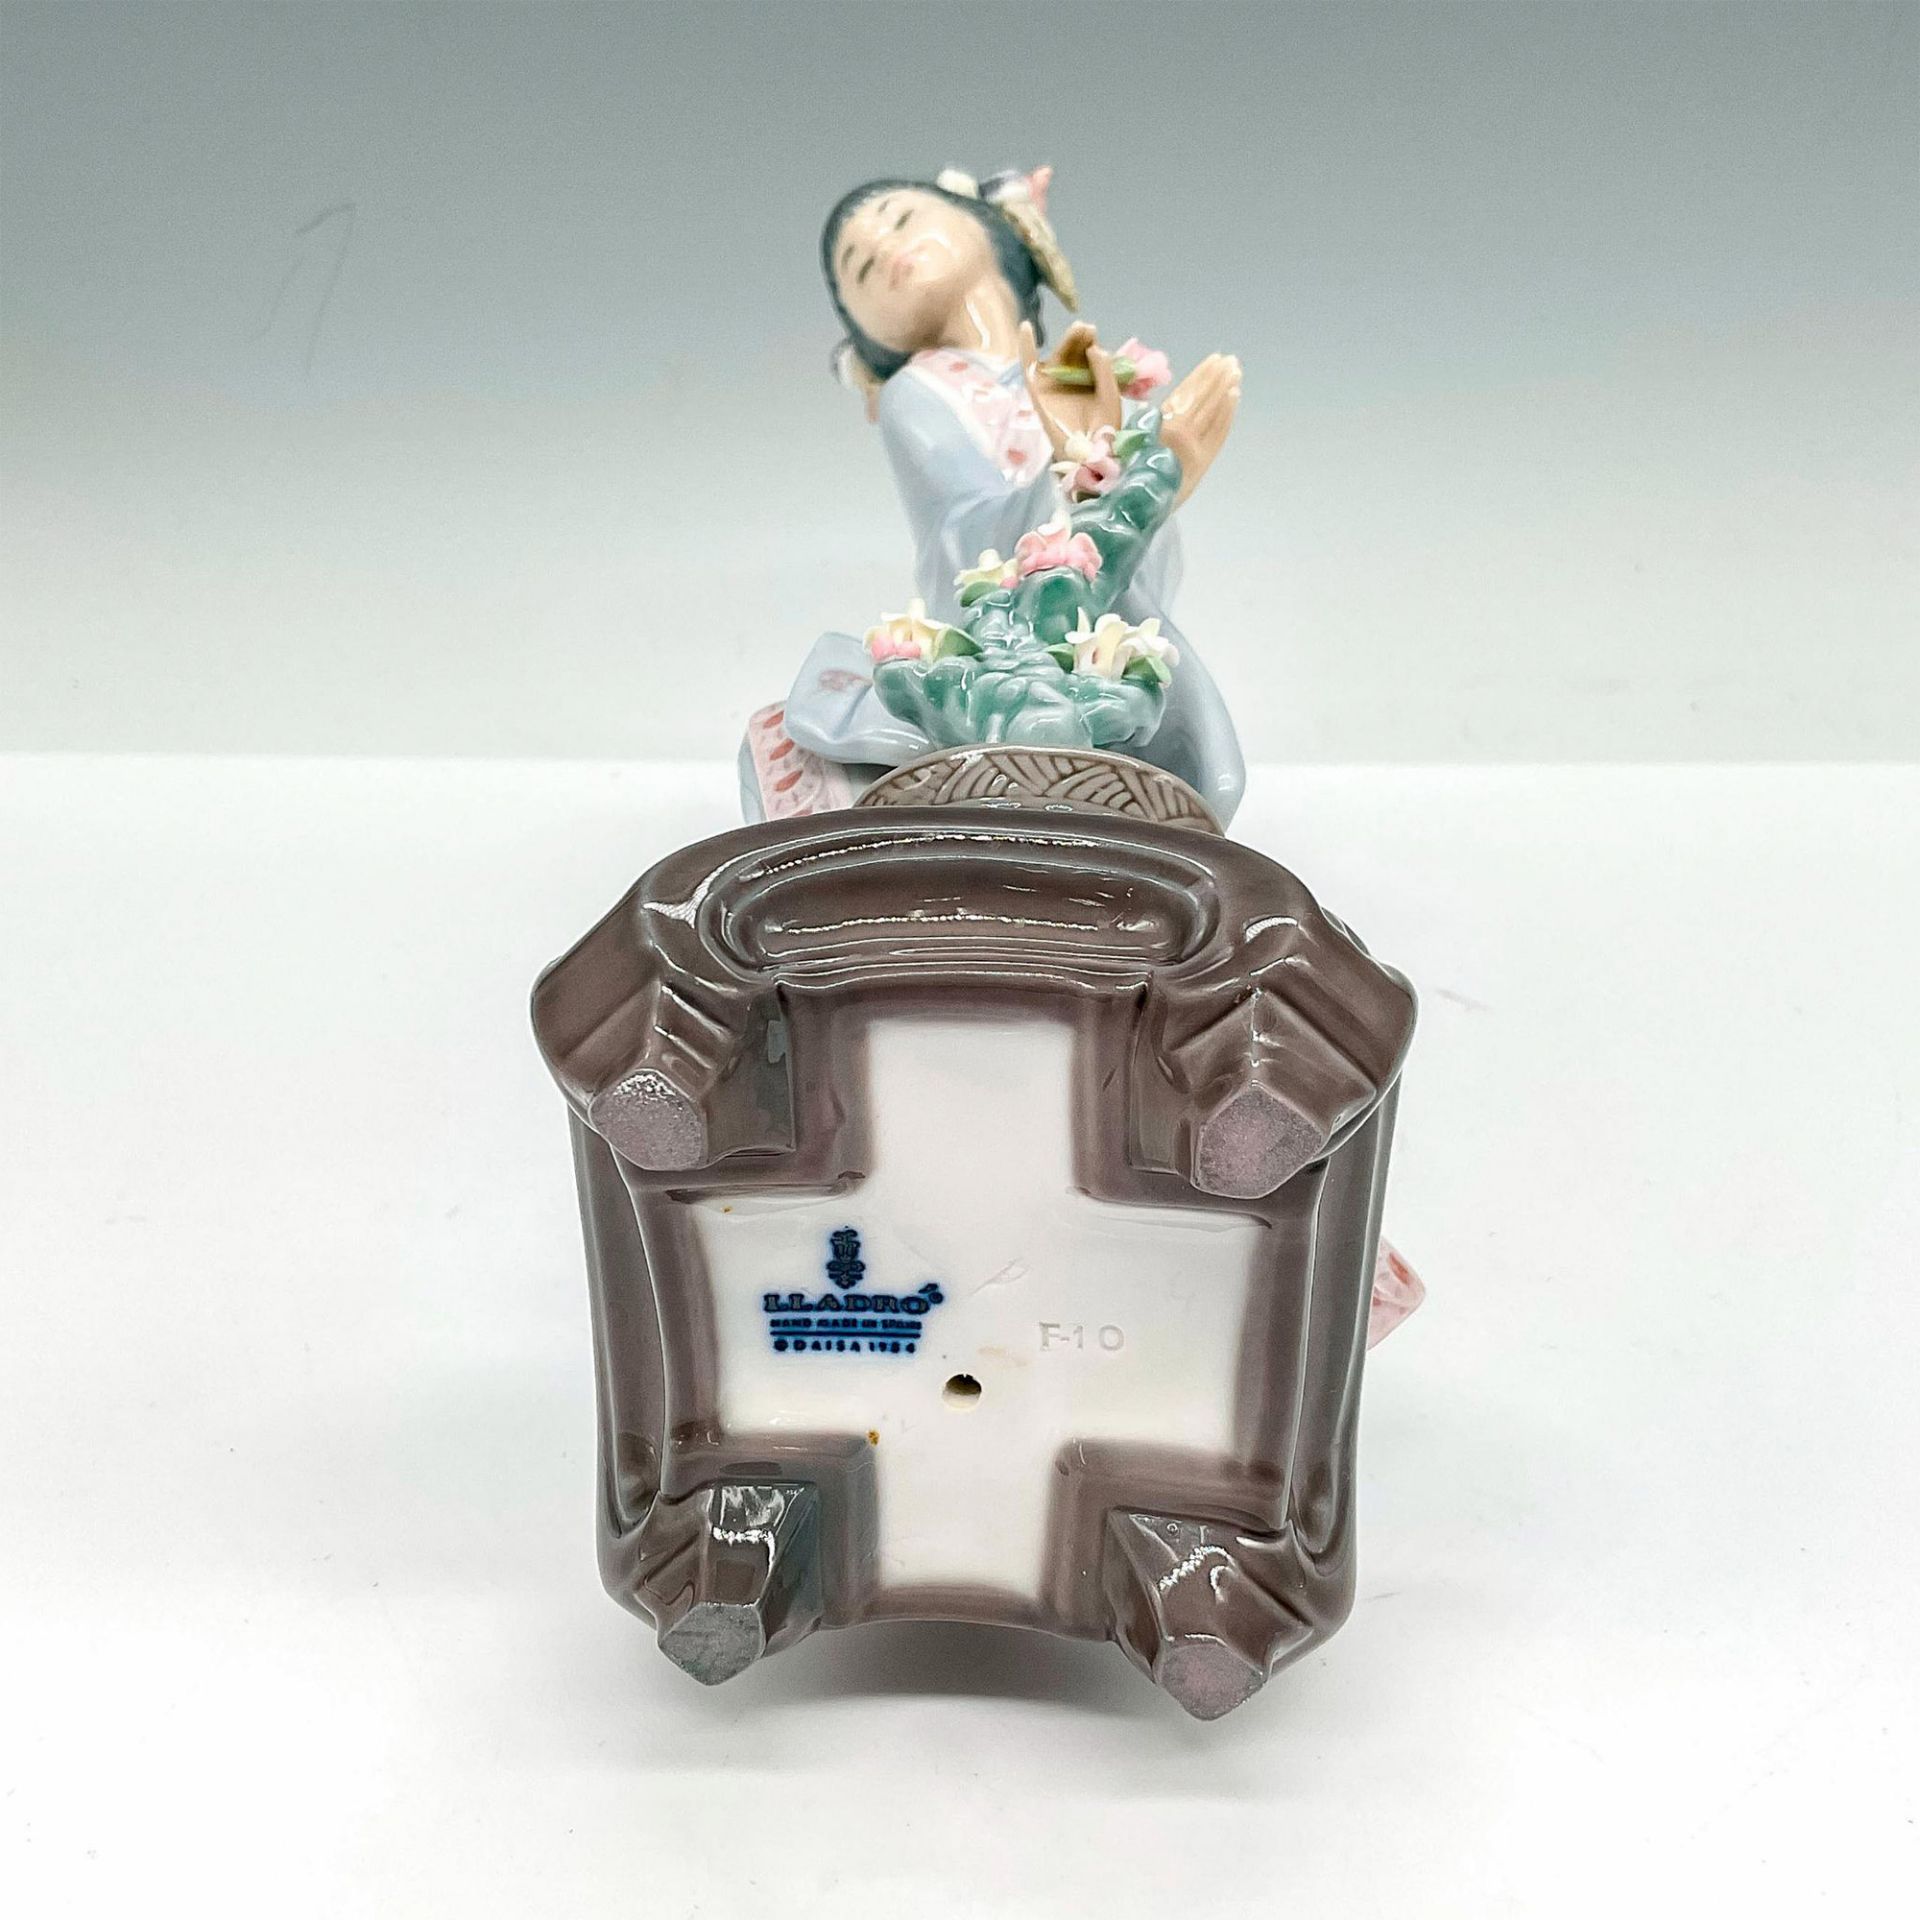 Mayumi 1001449 - Lladro Porcelain Figurine - Image 4 of 4